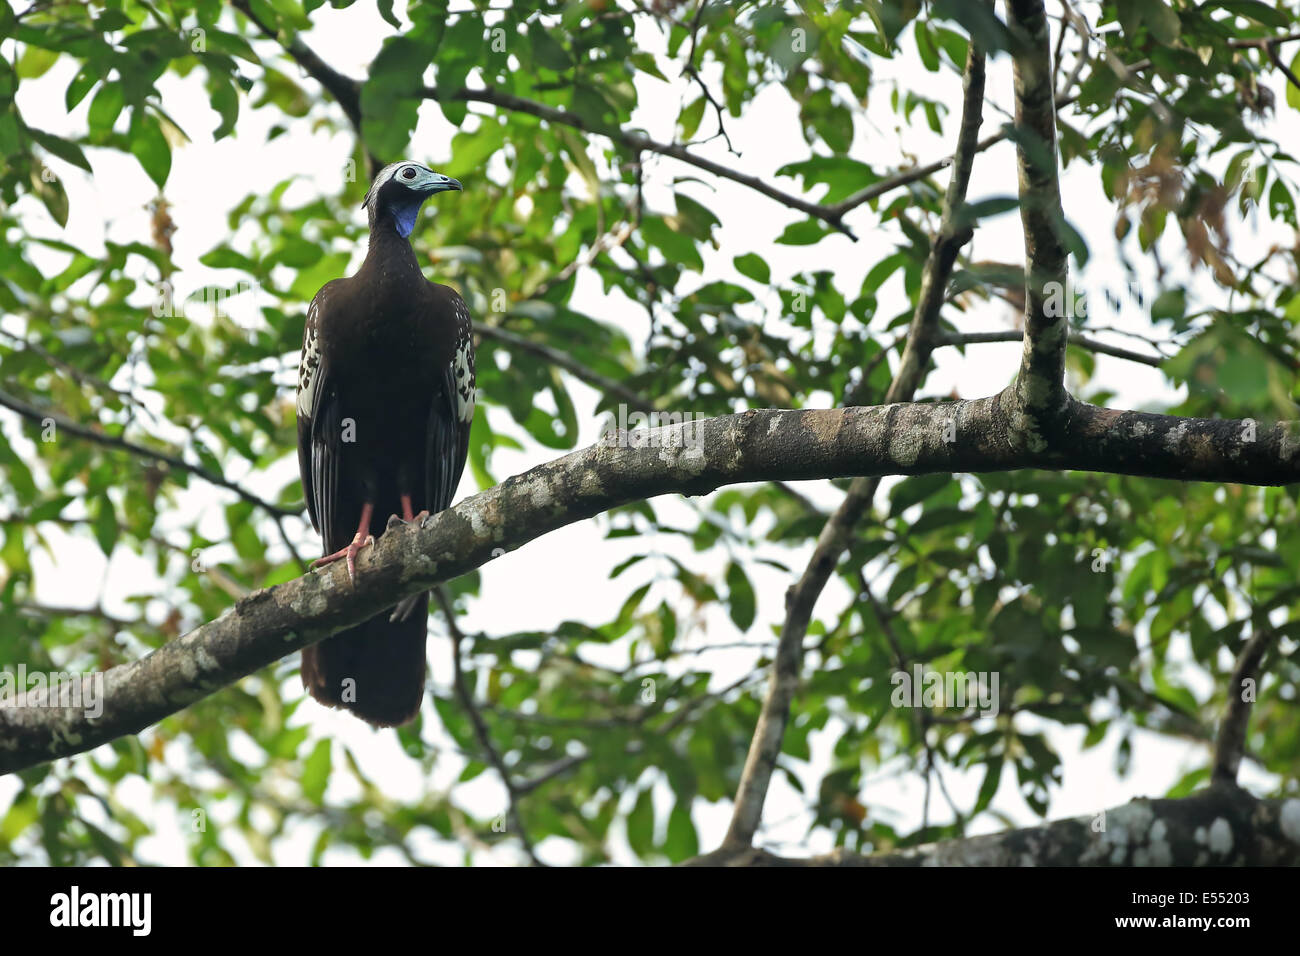 Trinidad Piping-guan (Pipile pipile) adult, perched on branch, Trinidad, Trinidad and Tobago, March Stock Photo